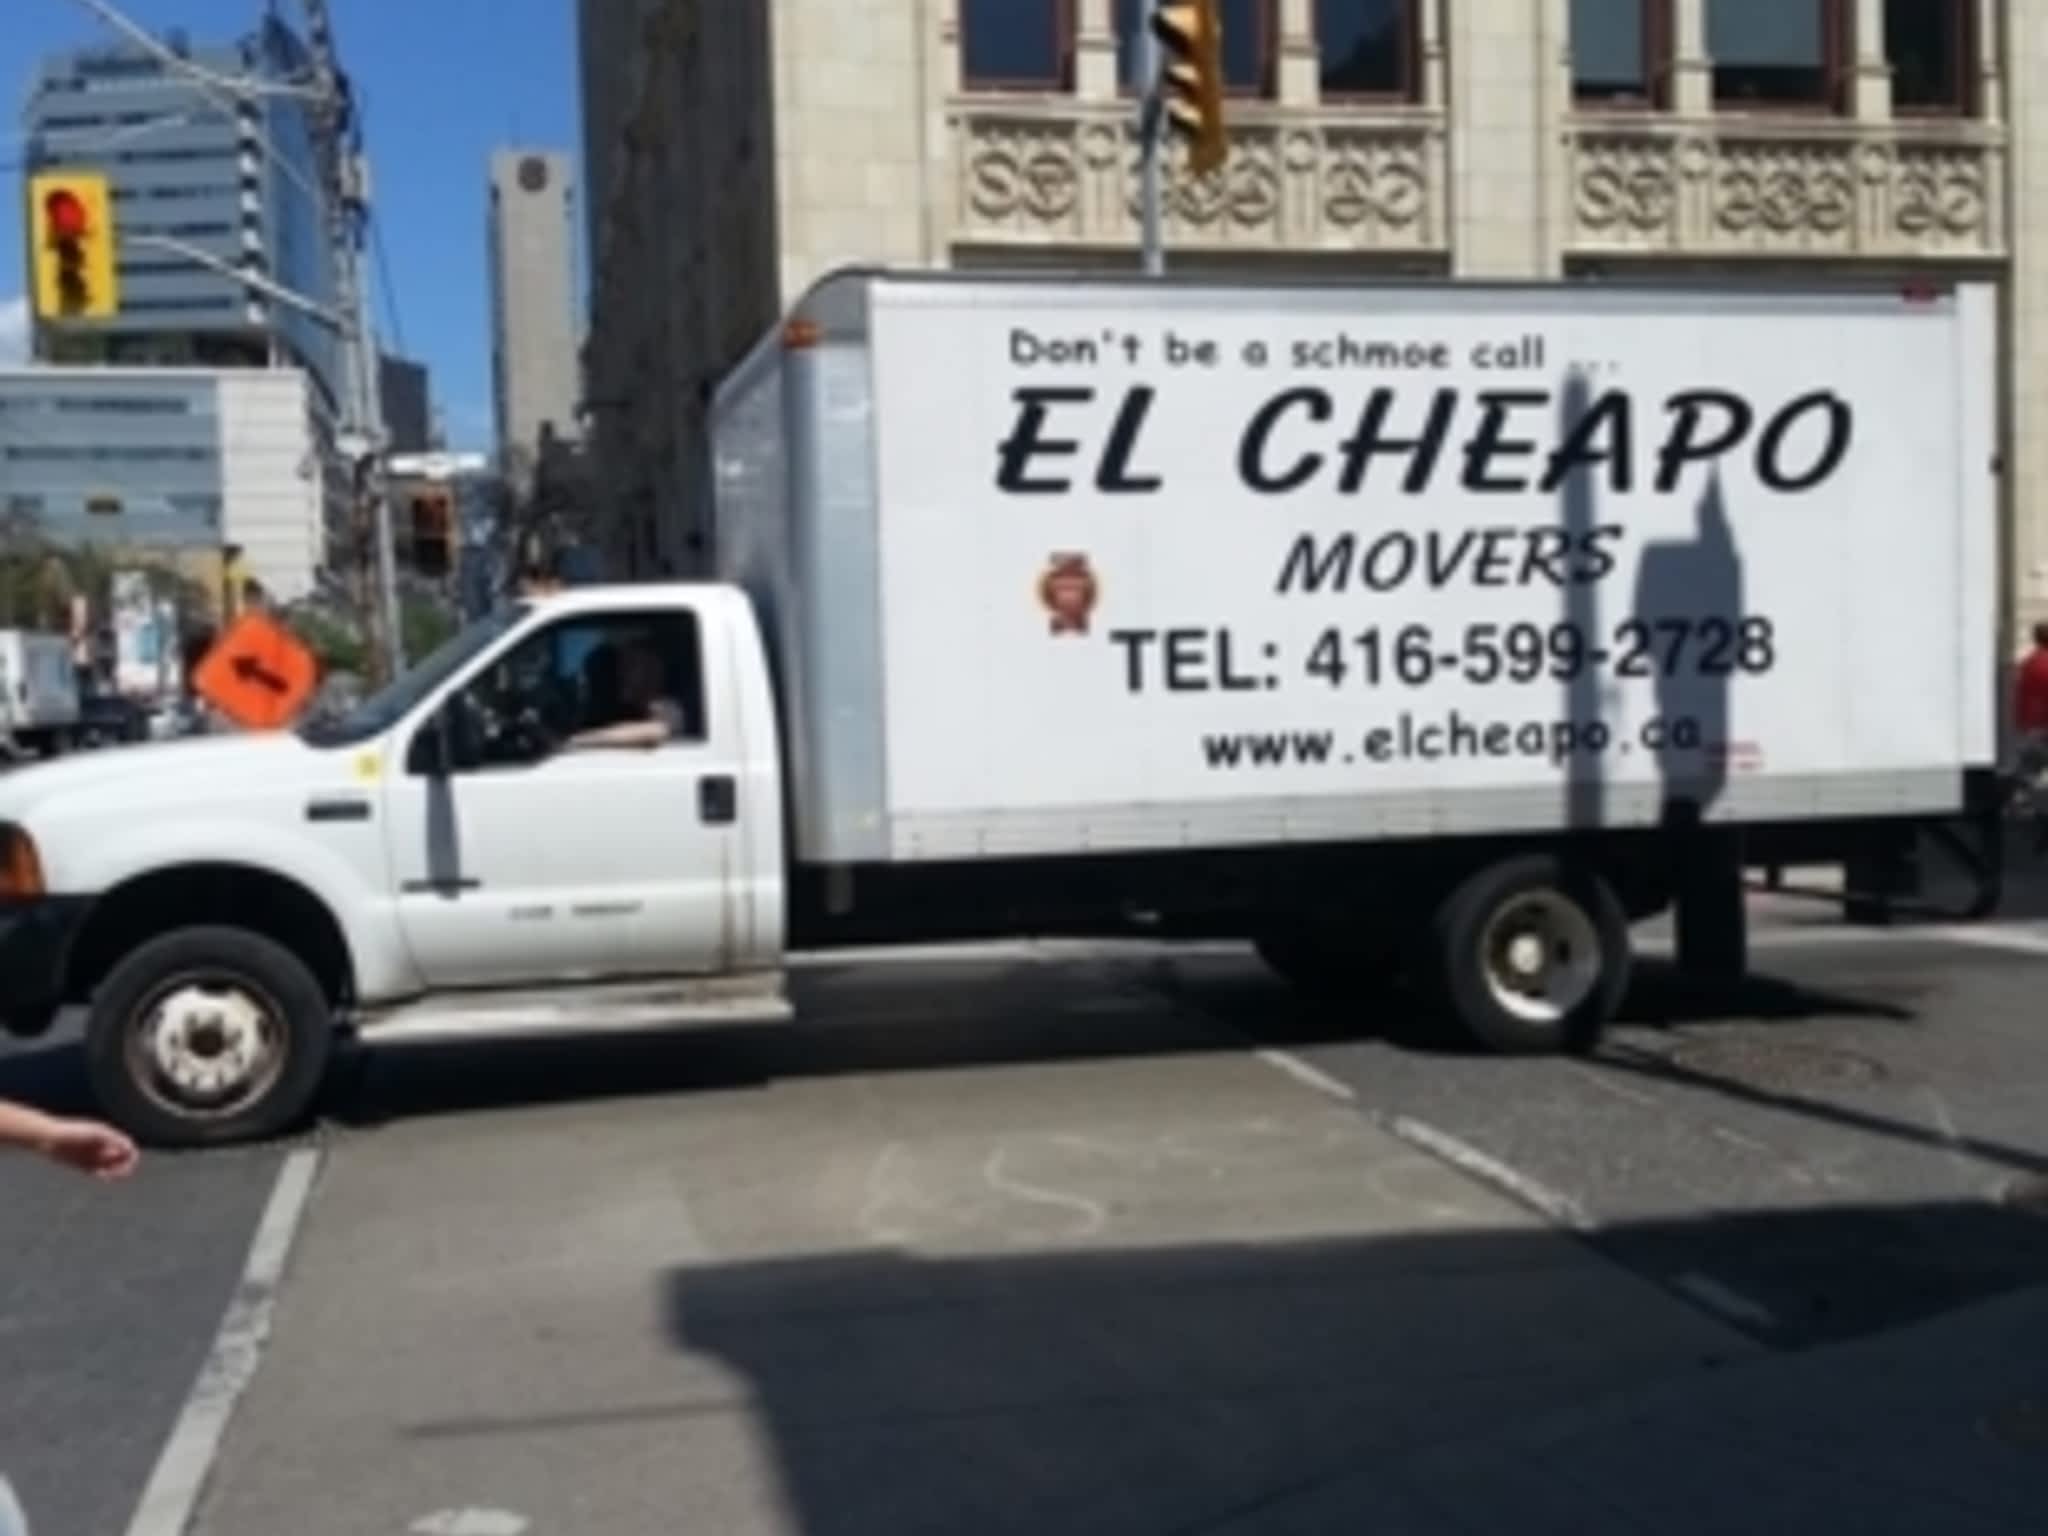 photo El Cheapo Movers Ltd